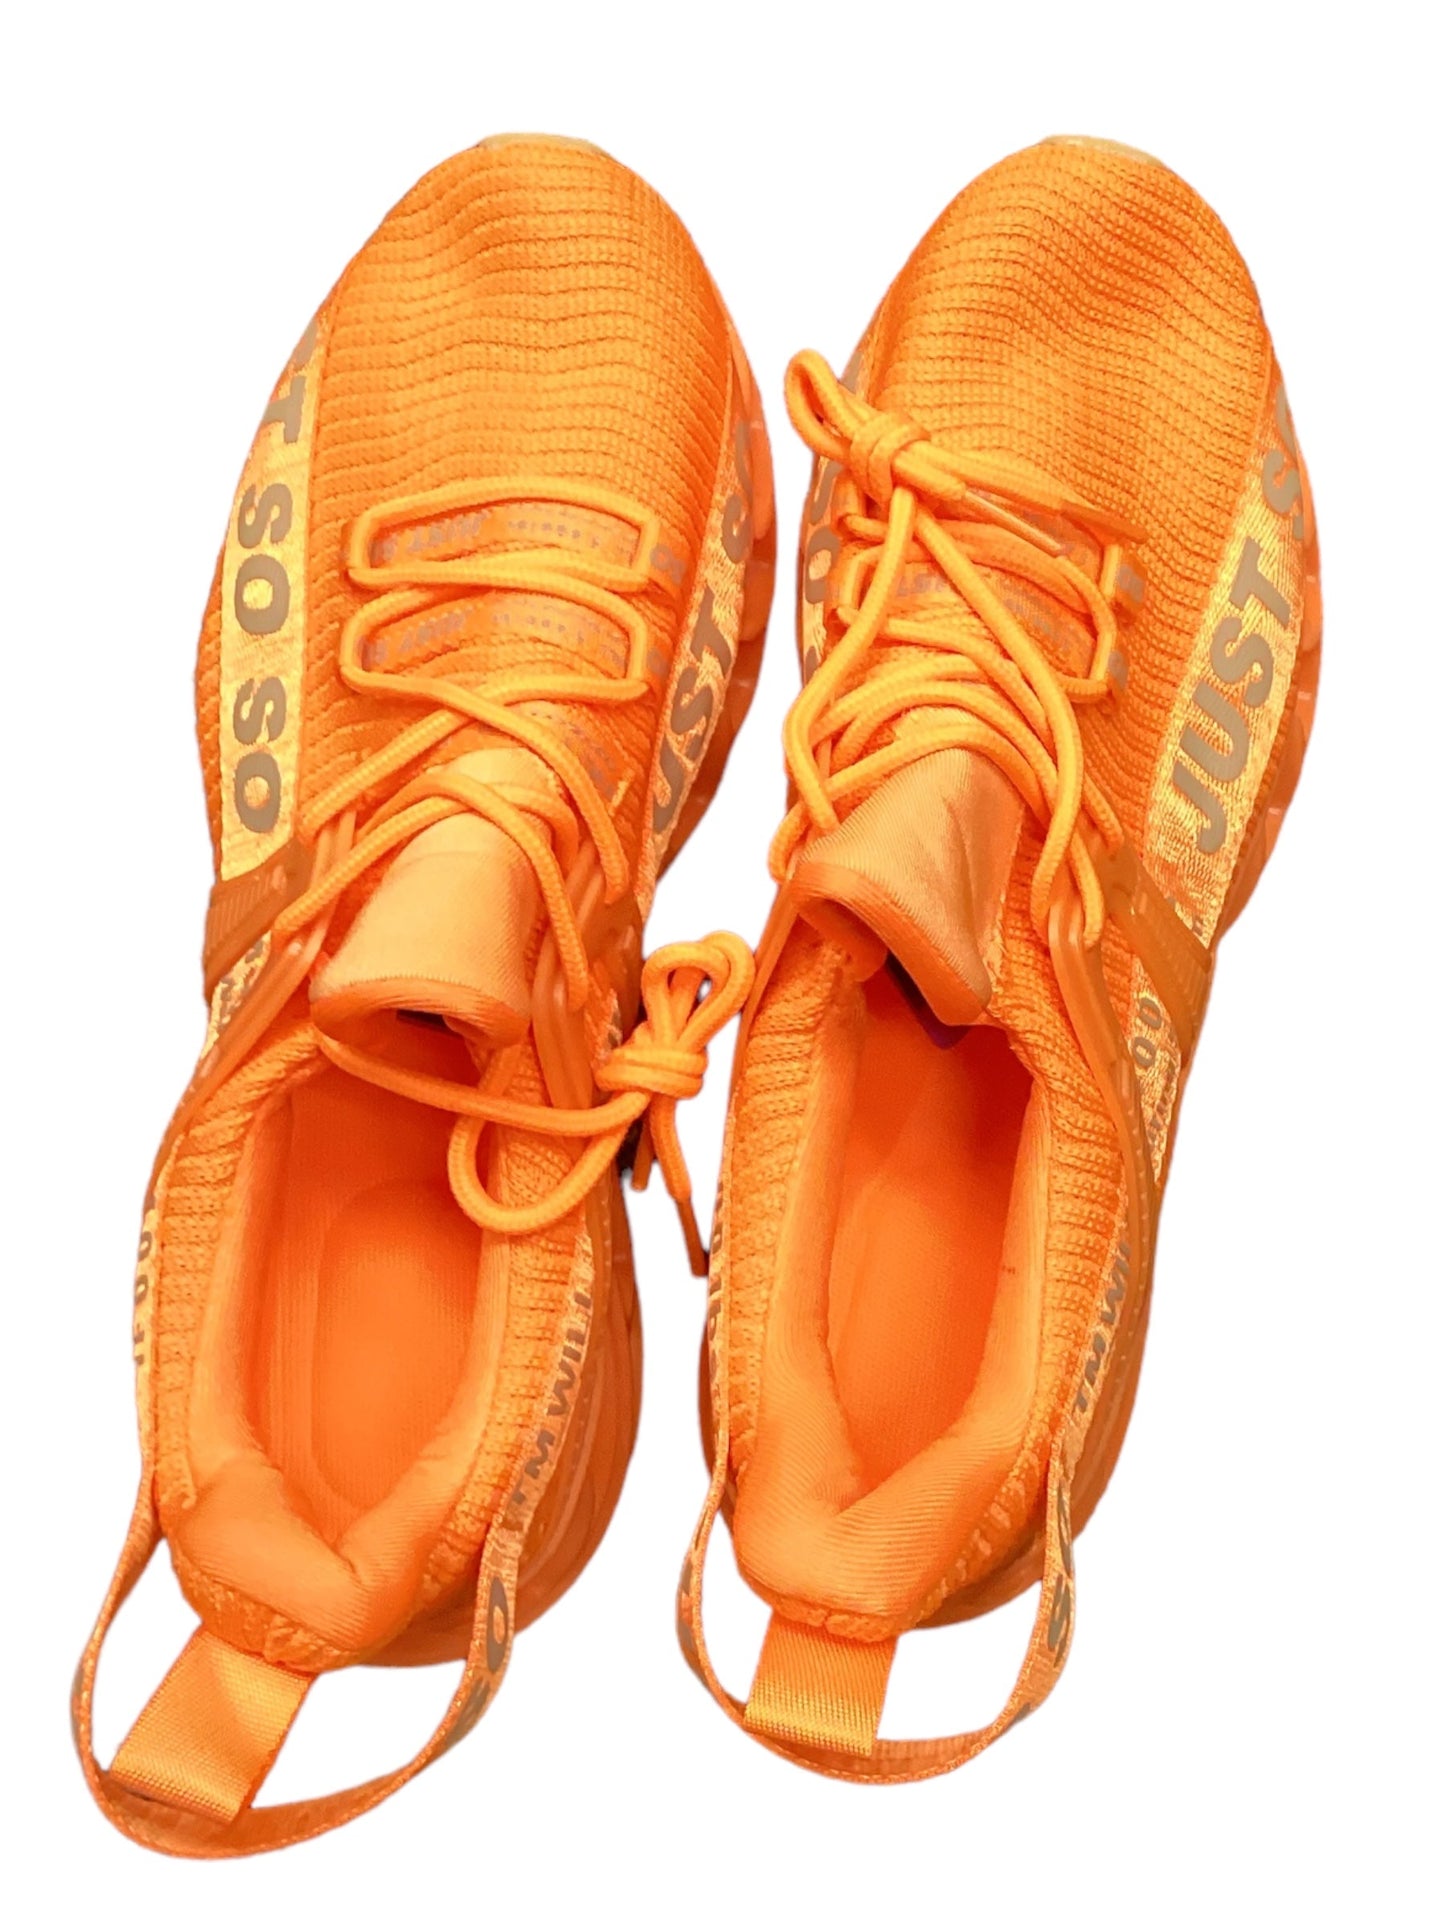 Orange Shoes Athletic Clothes Mentor, Size 9.5